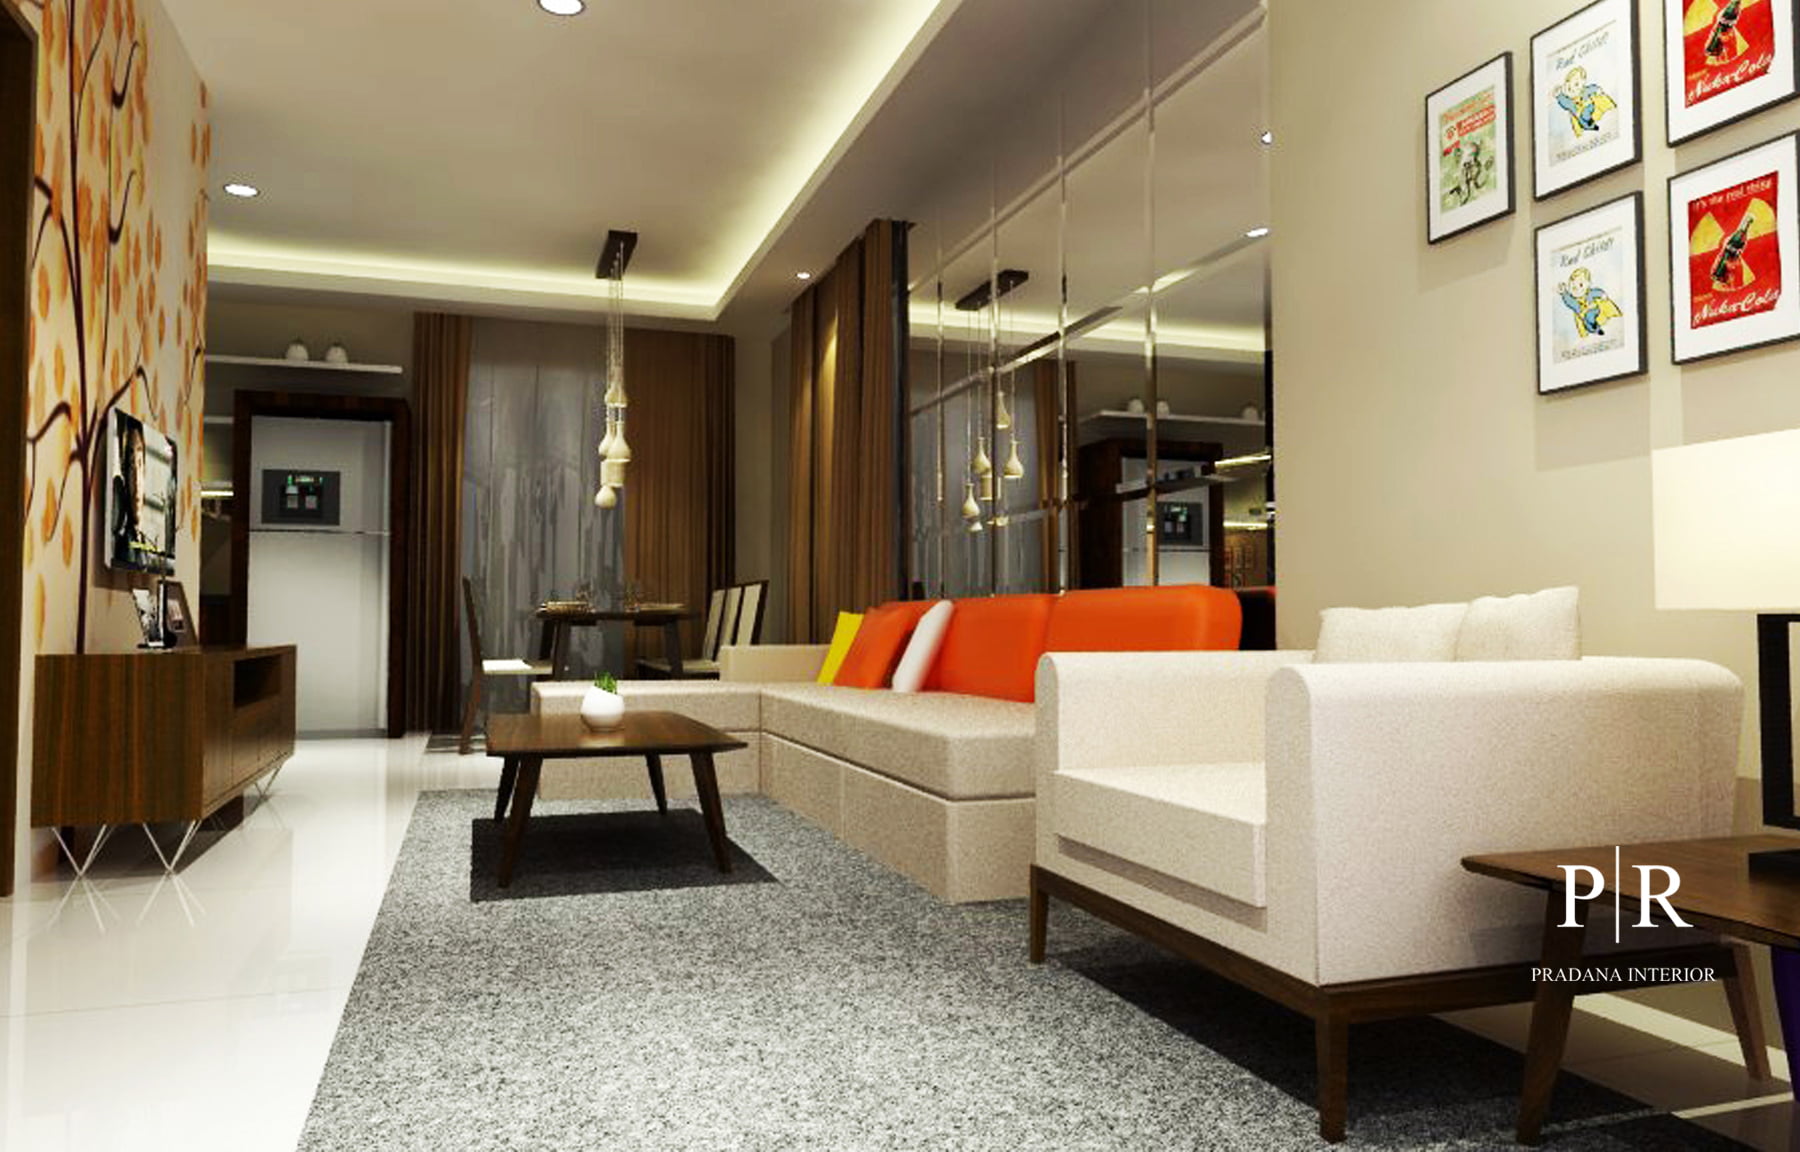 Jasa Interior Apartemen Jakarta Murah Berkualitas 085210694079 Pradana Interior